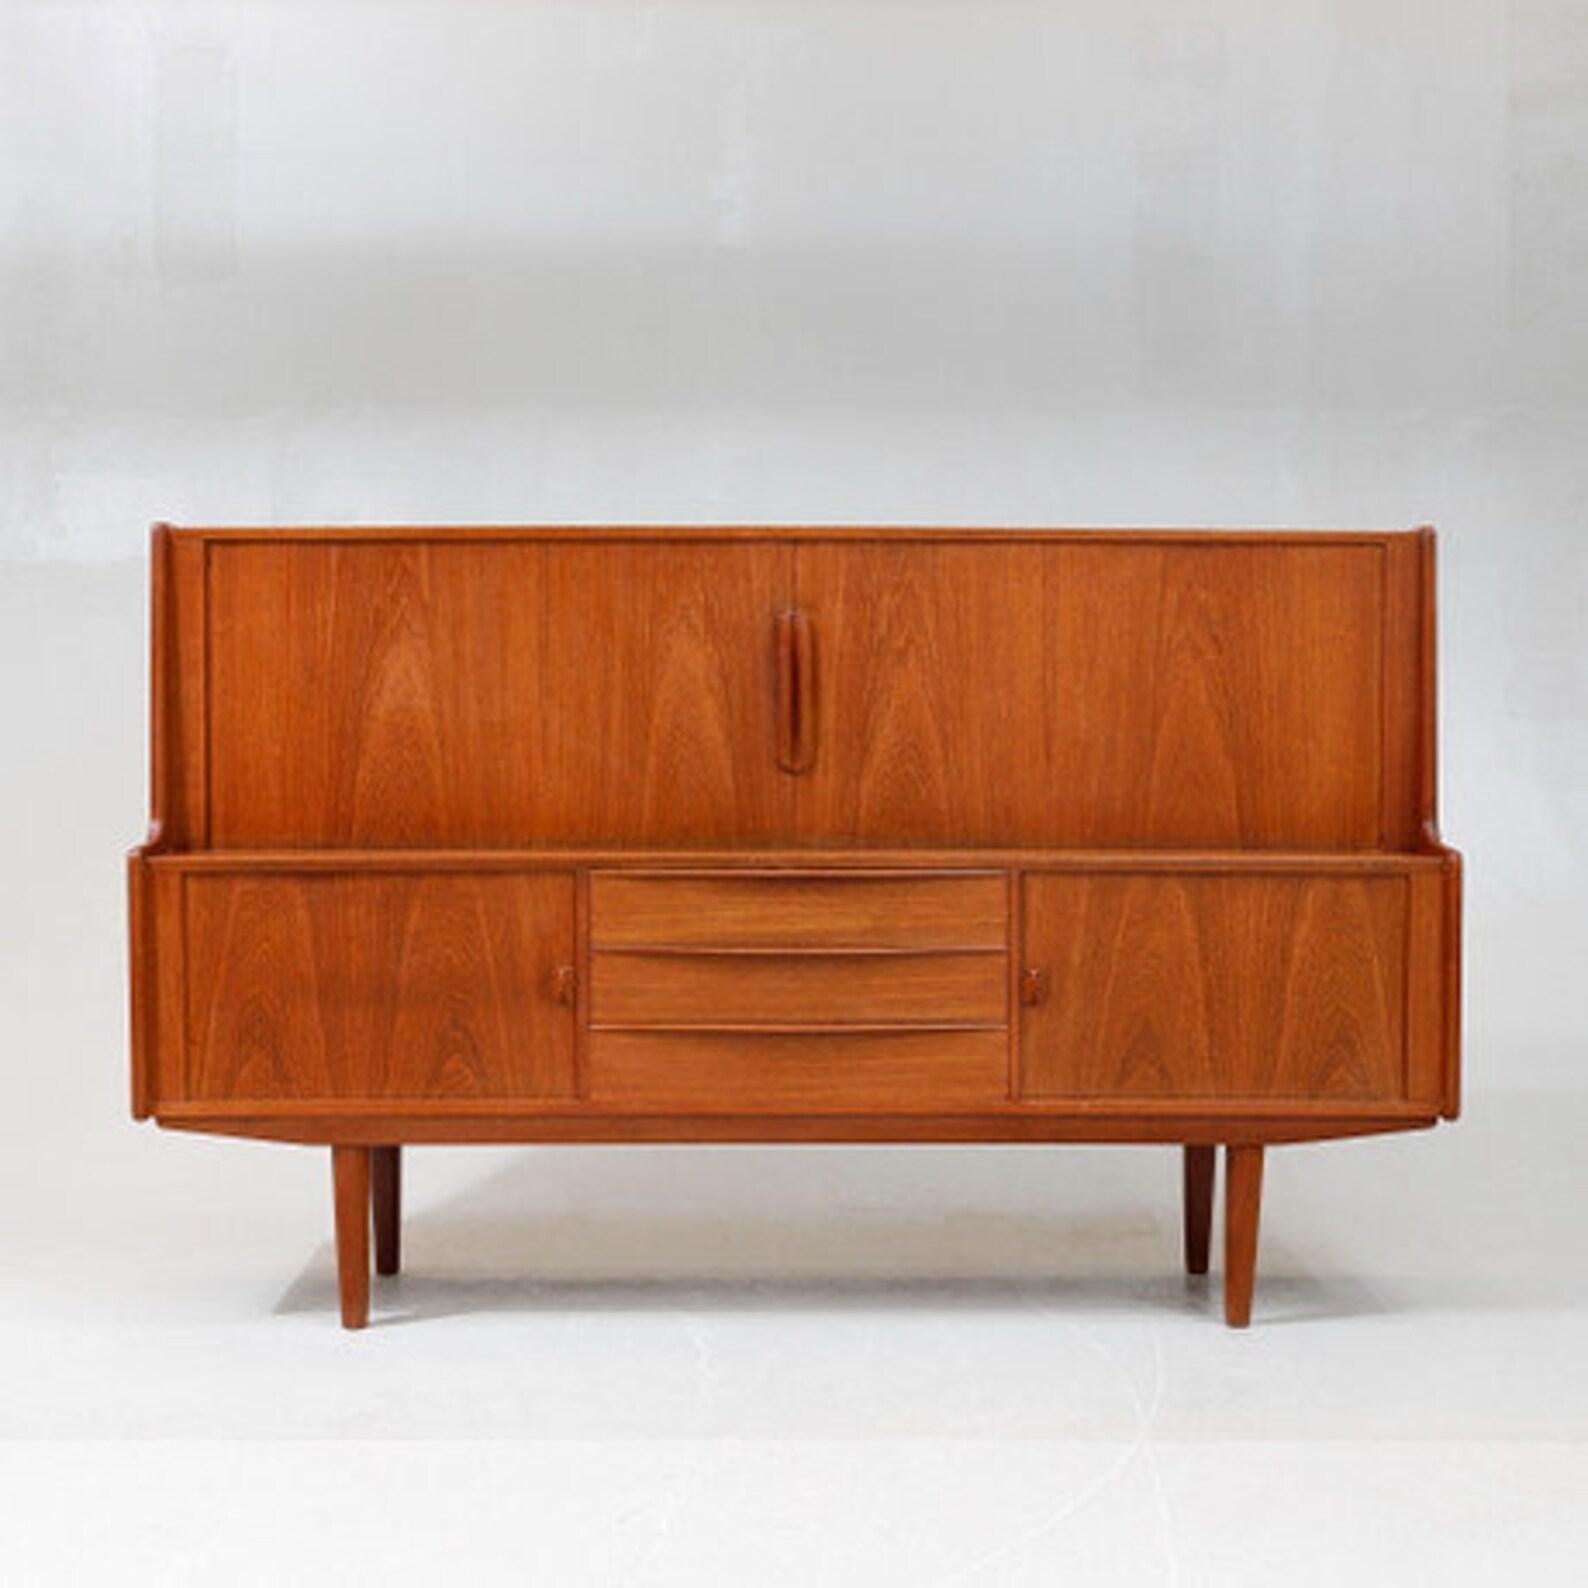 IB KOFOD-LARSEN. Sideboard, teak, Faarup Møbelfabrik, Denmark, mid-20th century. Furniture - Chests of drawers.